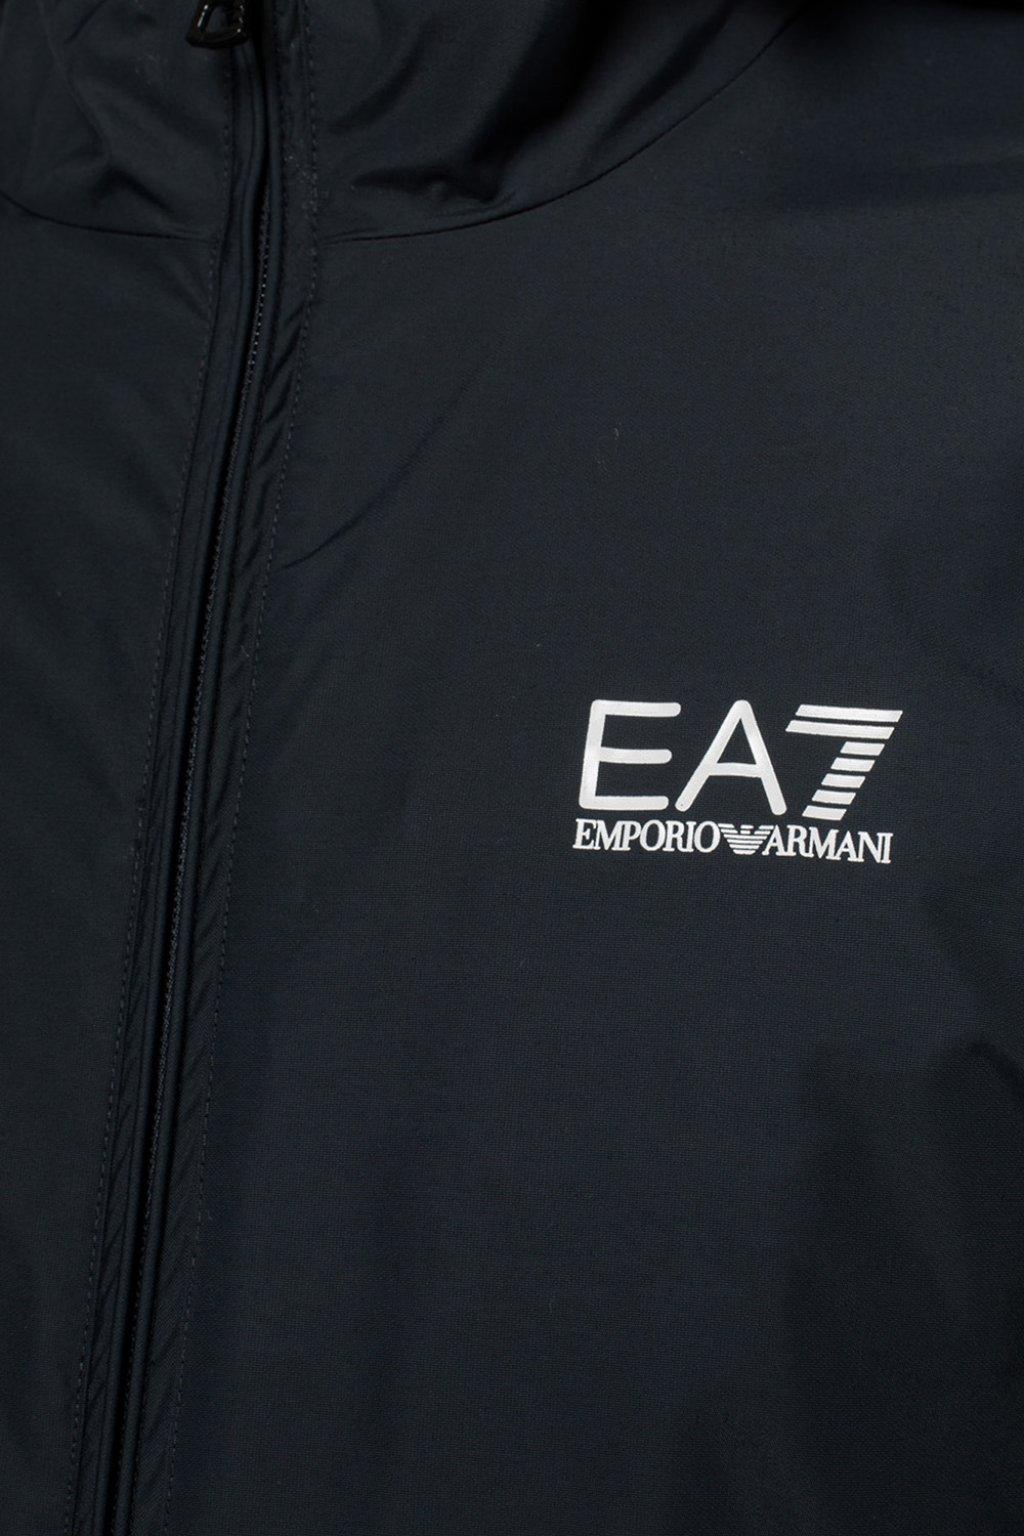 EA7 Synthetic Branded Rain Jacket in Navy Blue (Blue) for Men - Lyst